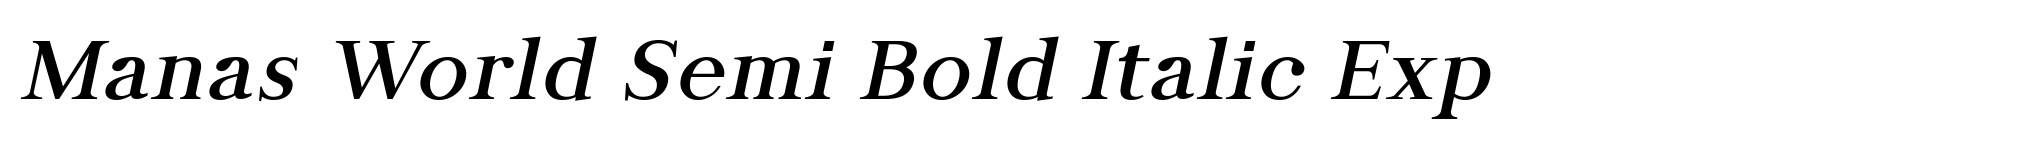 Manas World Semi Bold Italic Exp image